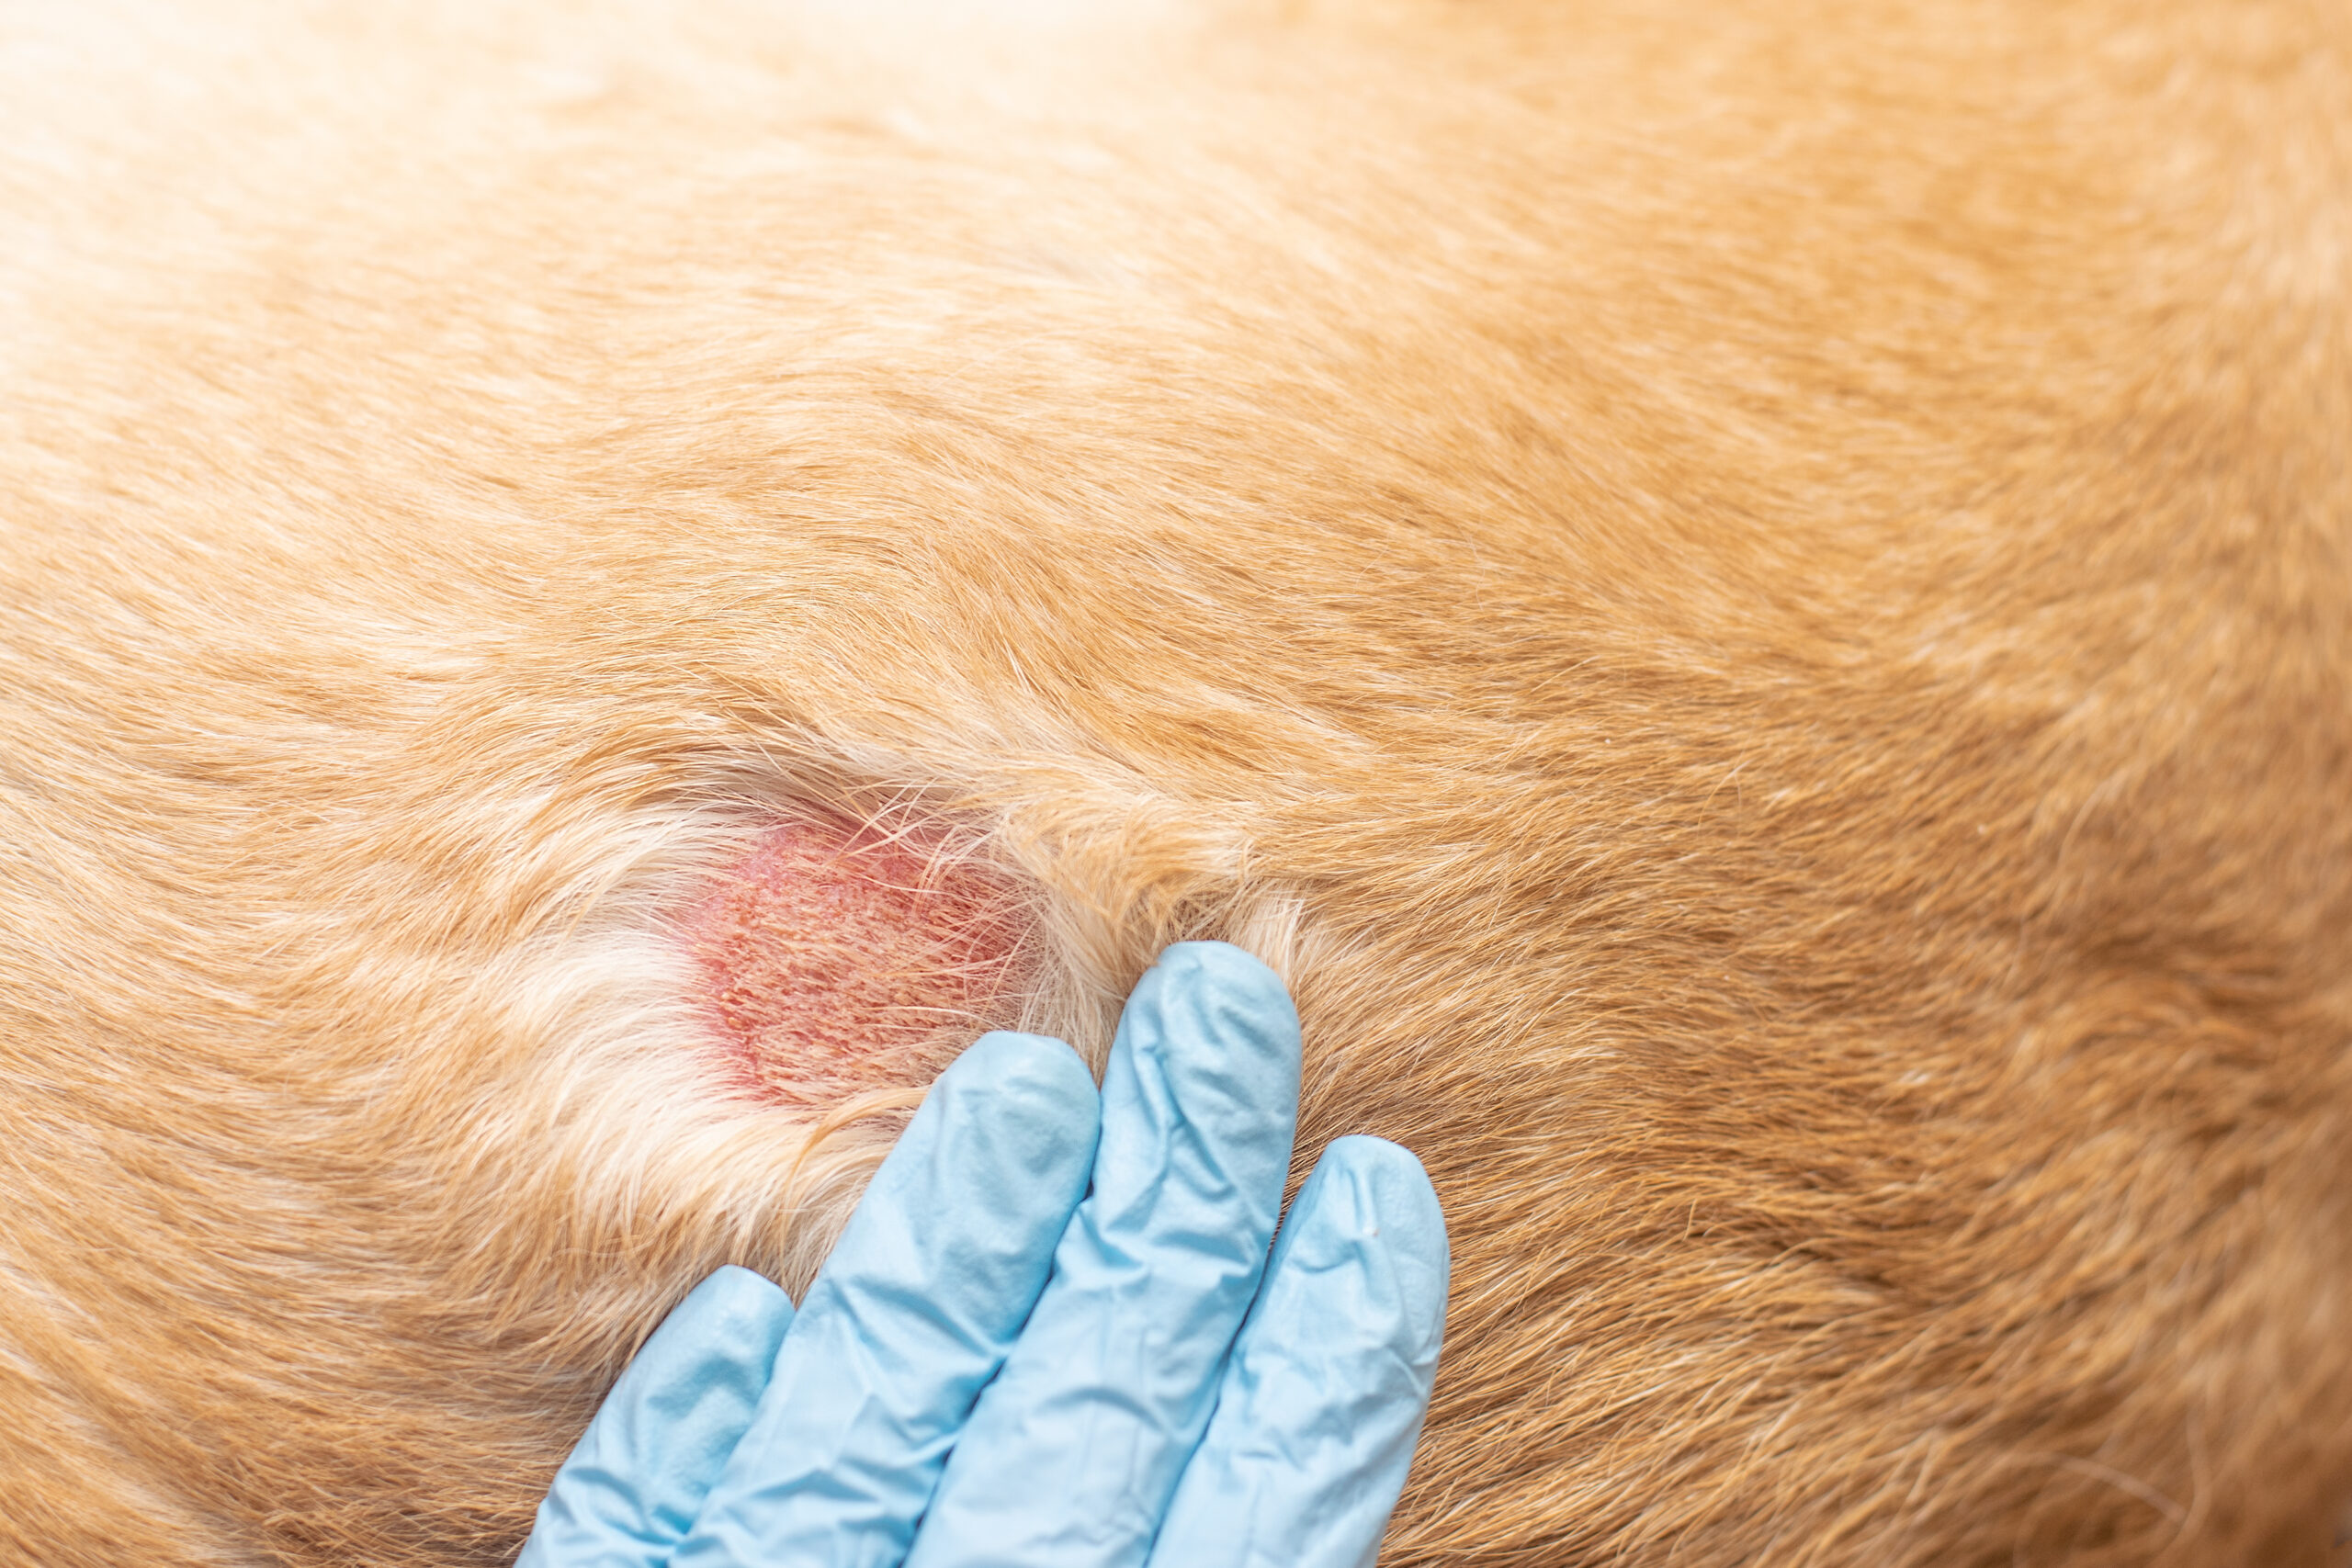 a dog skin wound